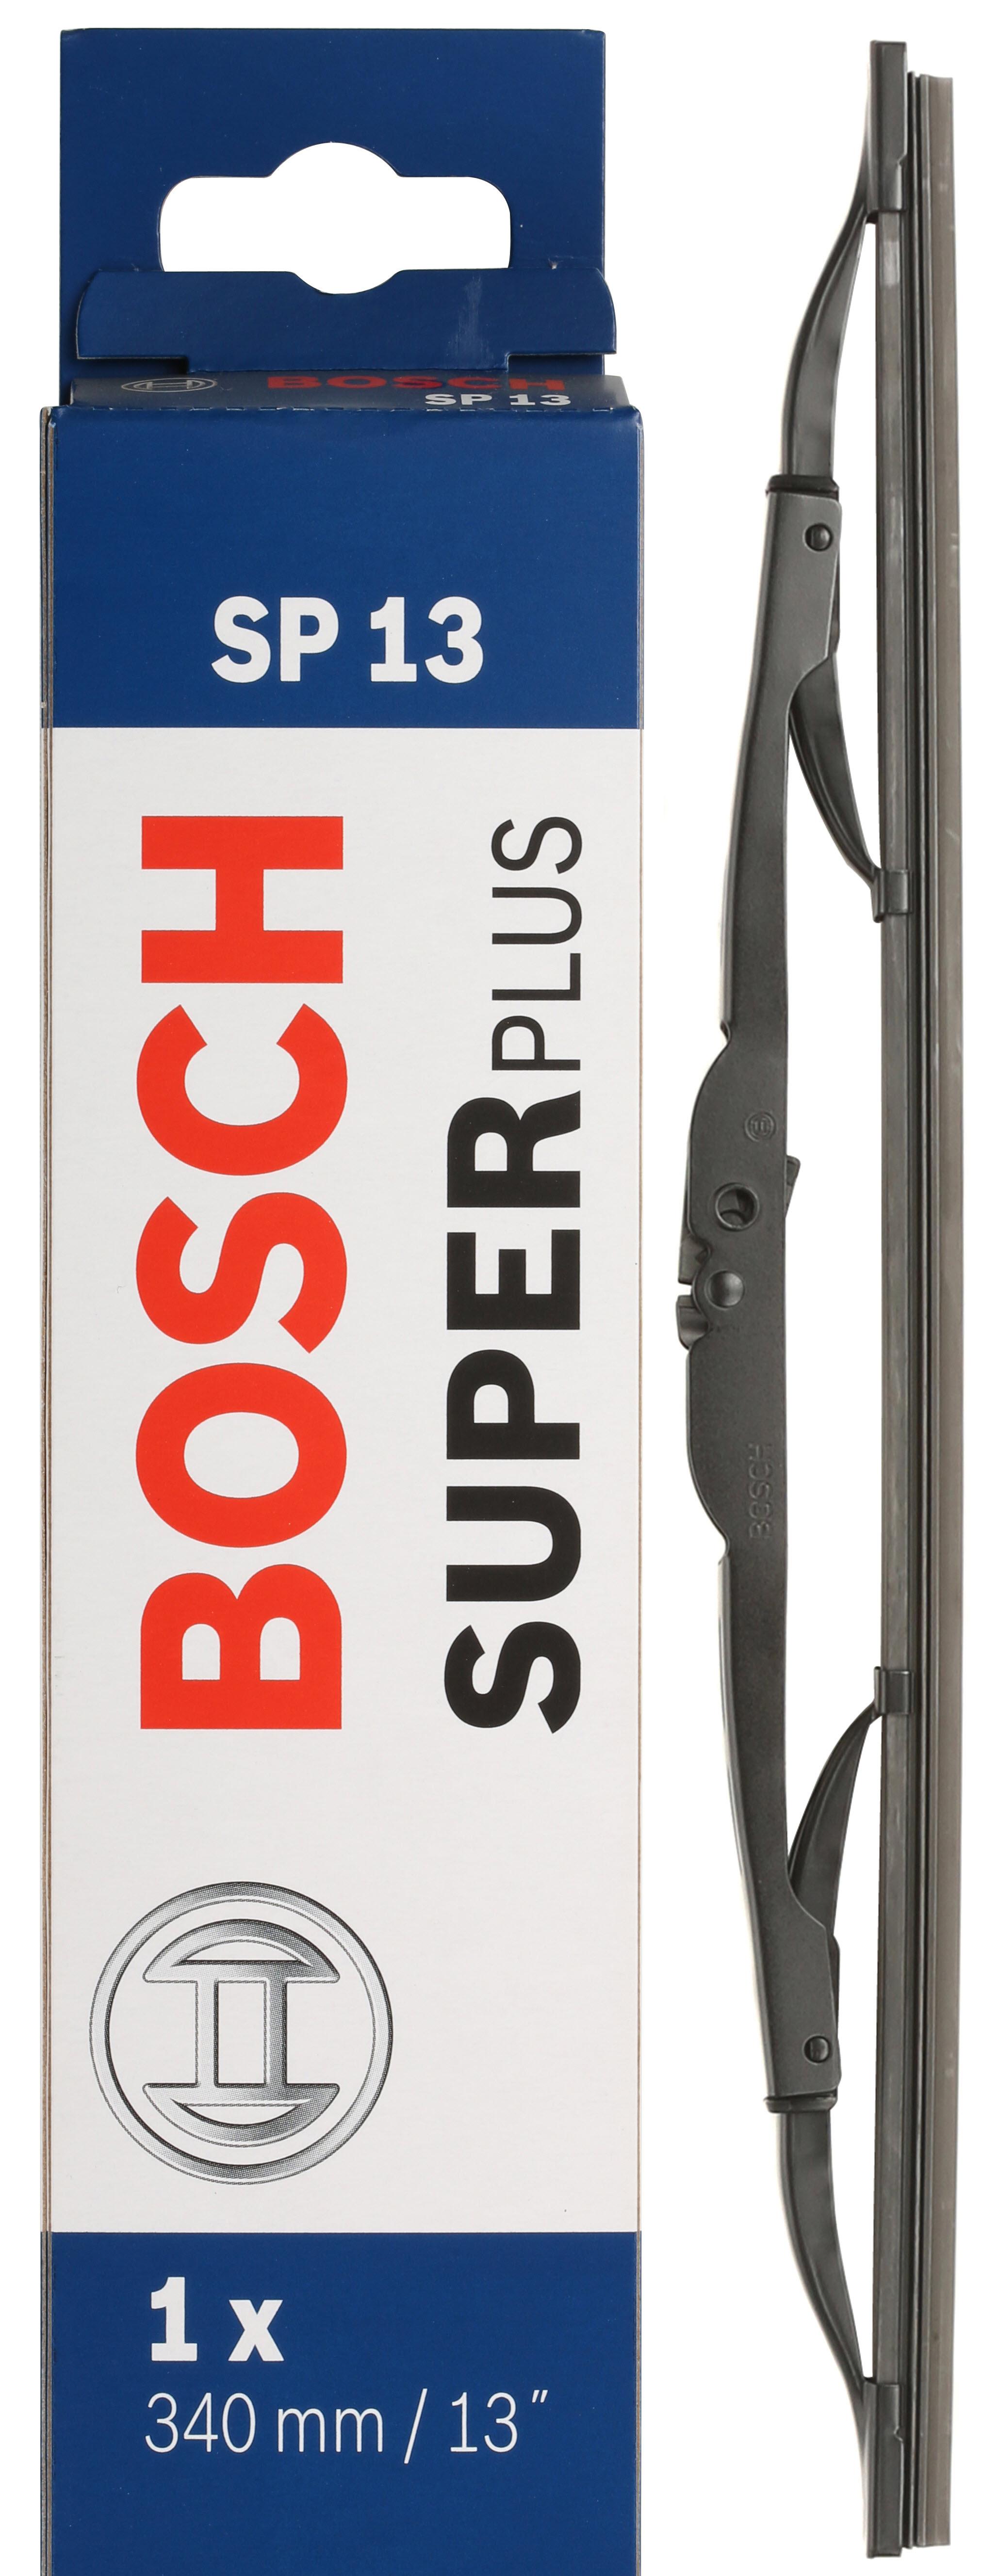 Bosch Sp13 Wiper Blade - Single